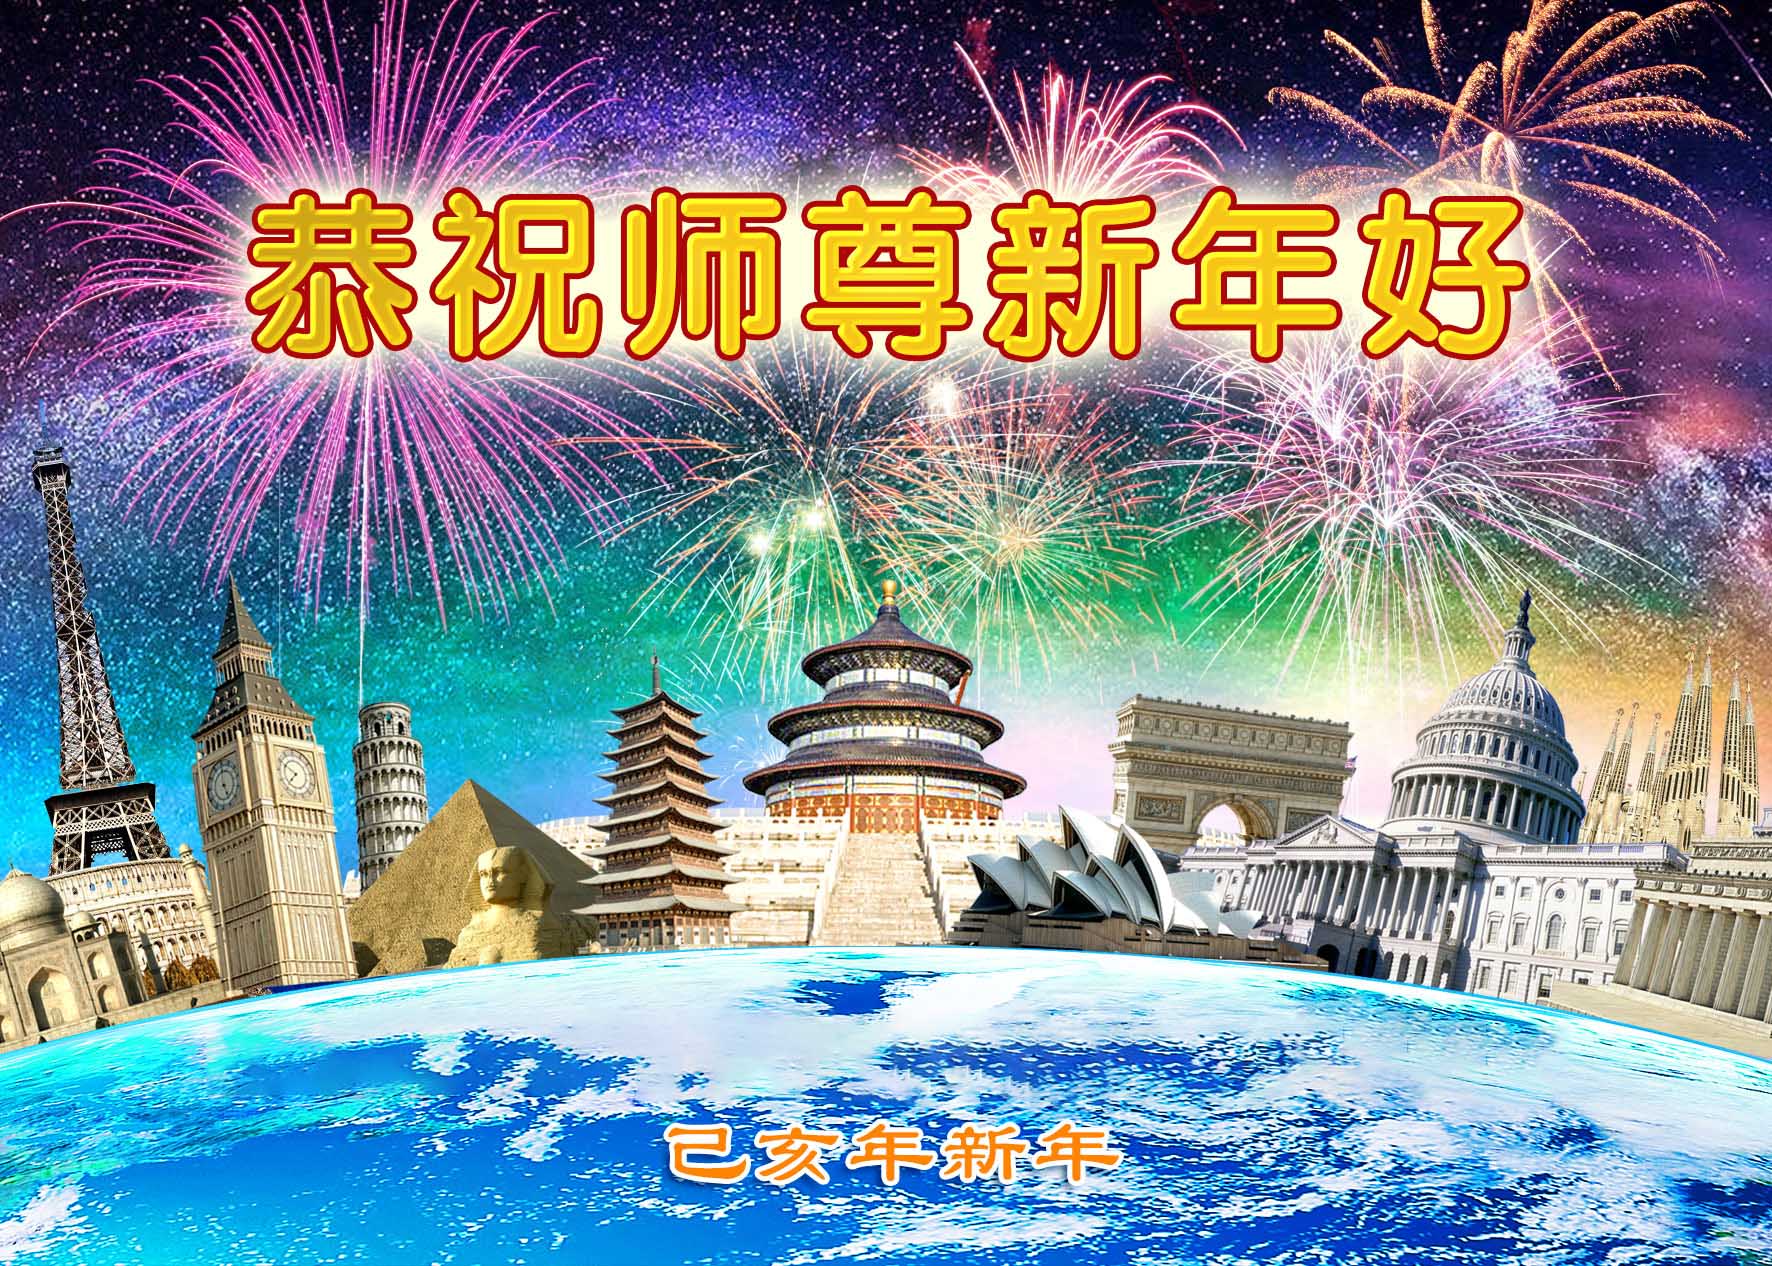 Image for article تمرین‌کنندگان در هنگ کنگ، سال نوی چینی را به استاد لی تبریک می‌گویند